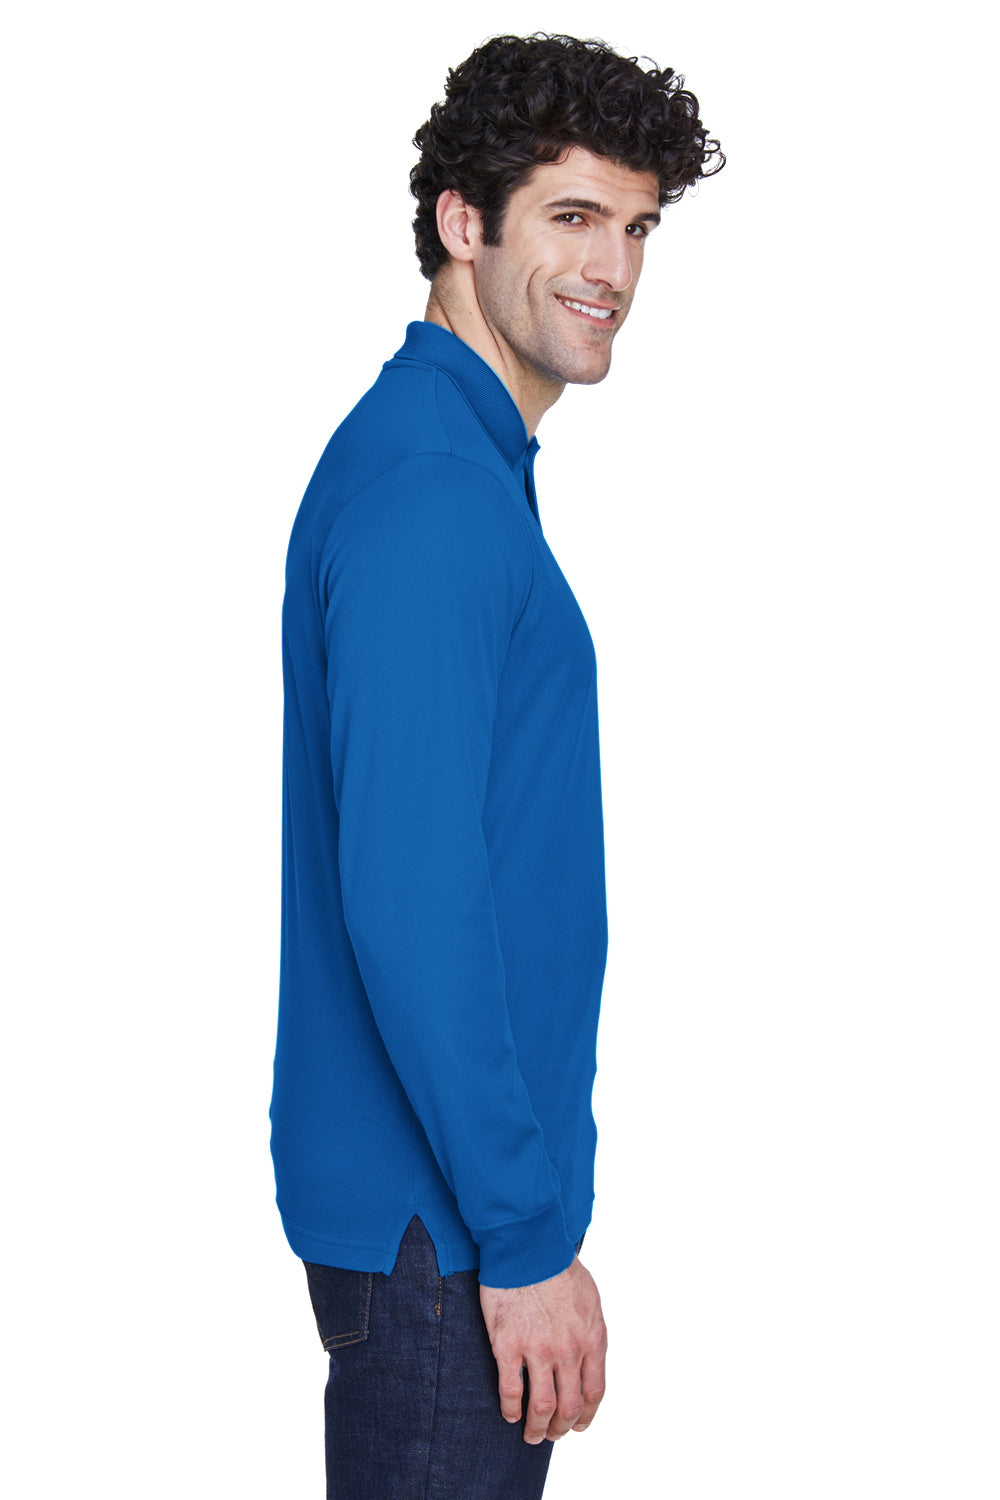 Core 365 88192 Mens Pinnacle Performance Moisture Wicking Long Sleeve Polo Shirt Royal Blue Side